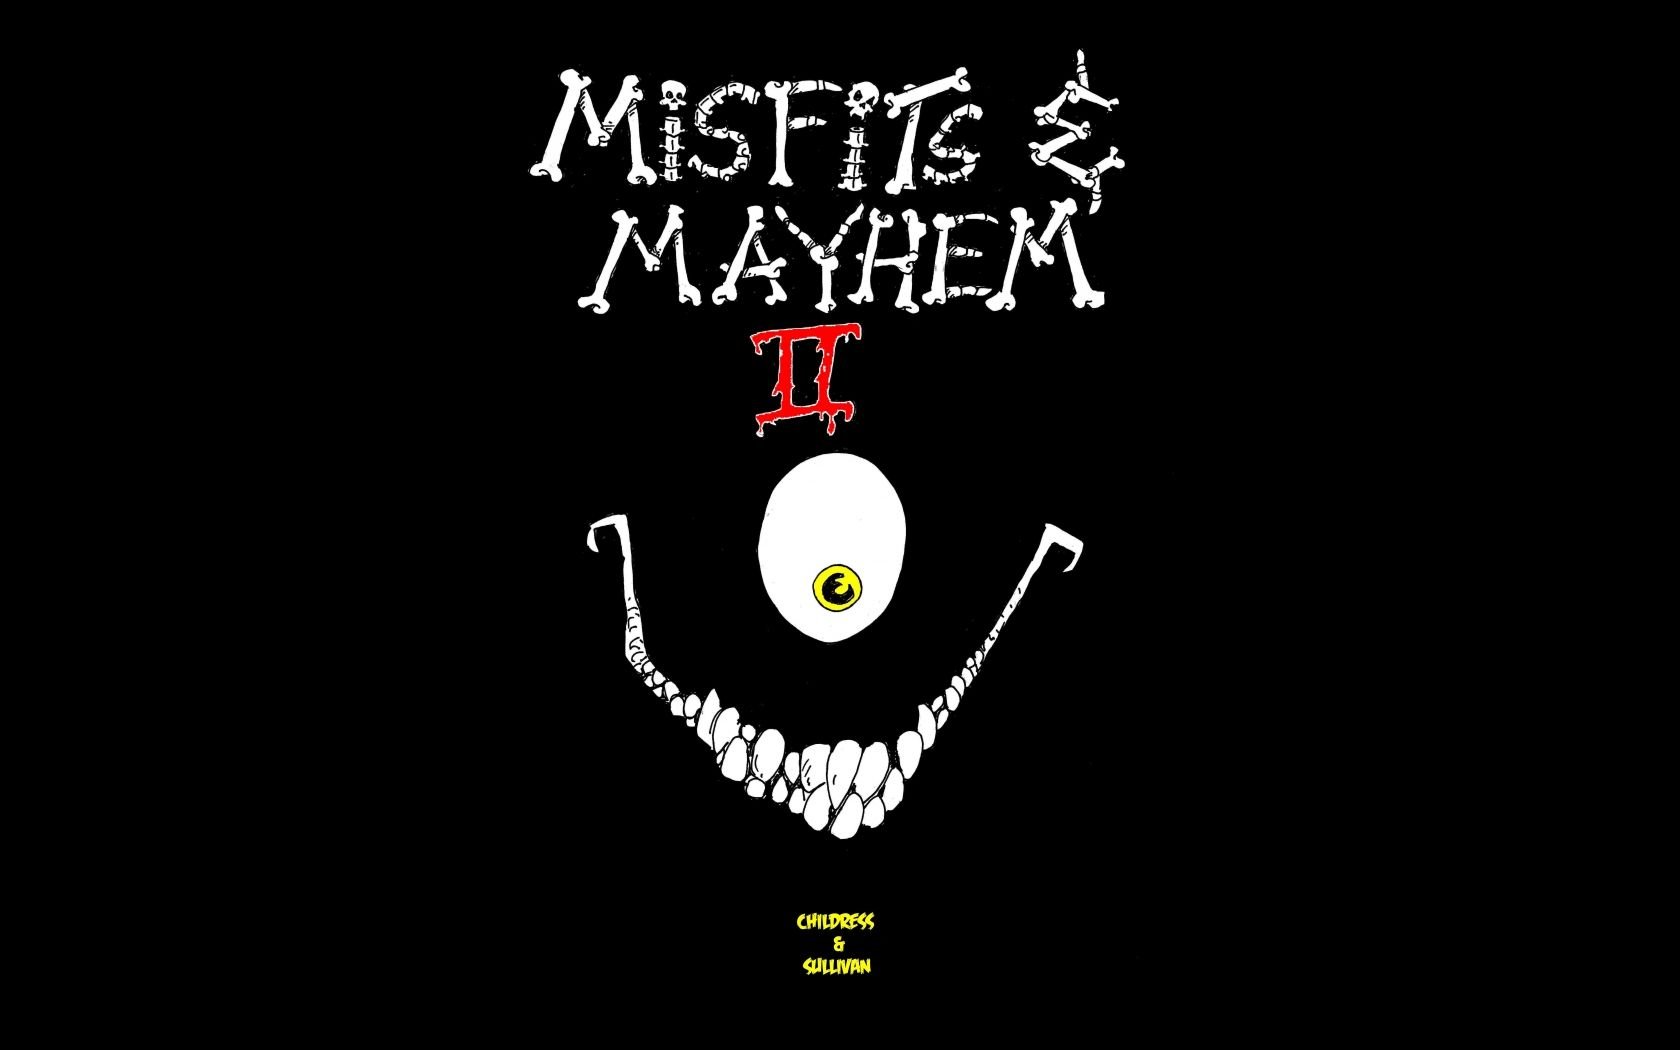 Free download misfits Mayhem II 8k Ultra HD Wallpaper Background